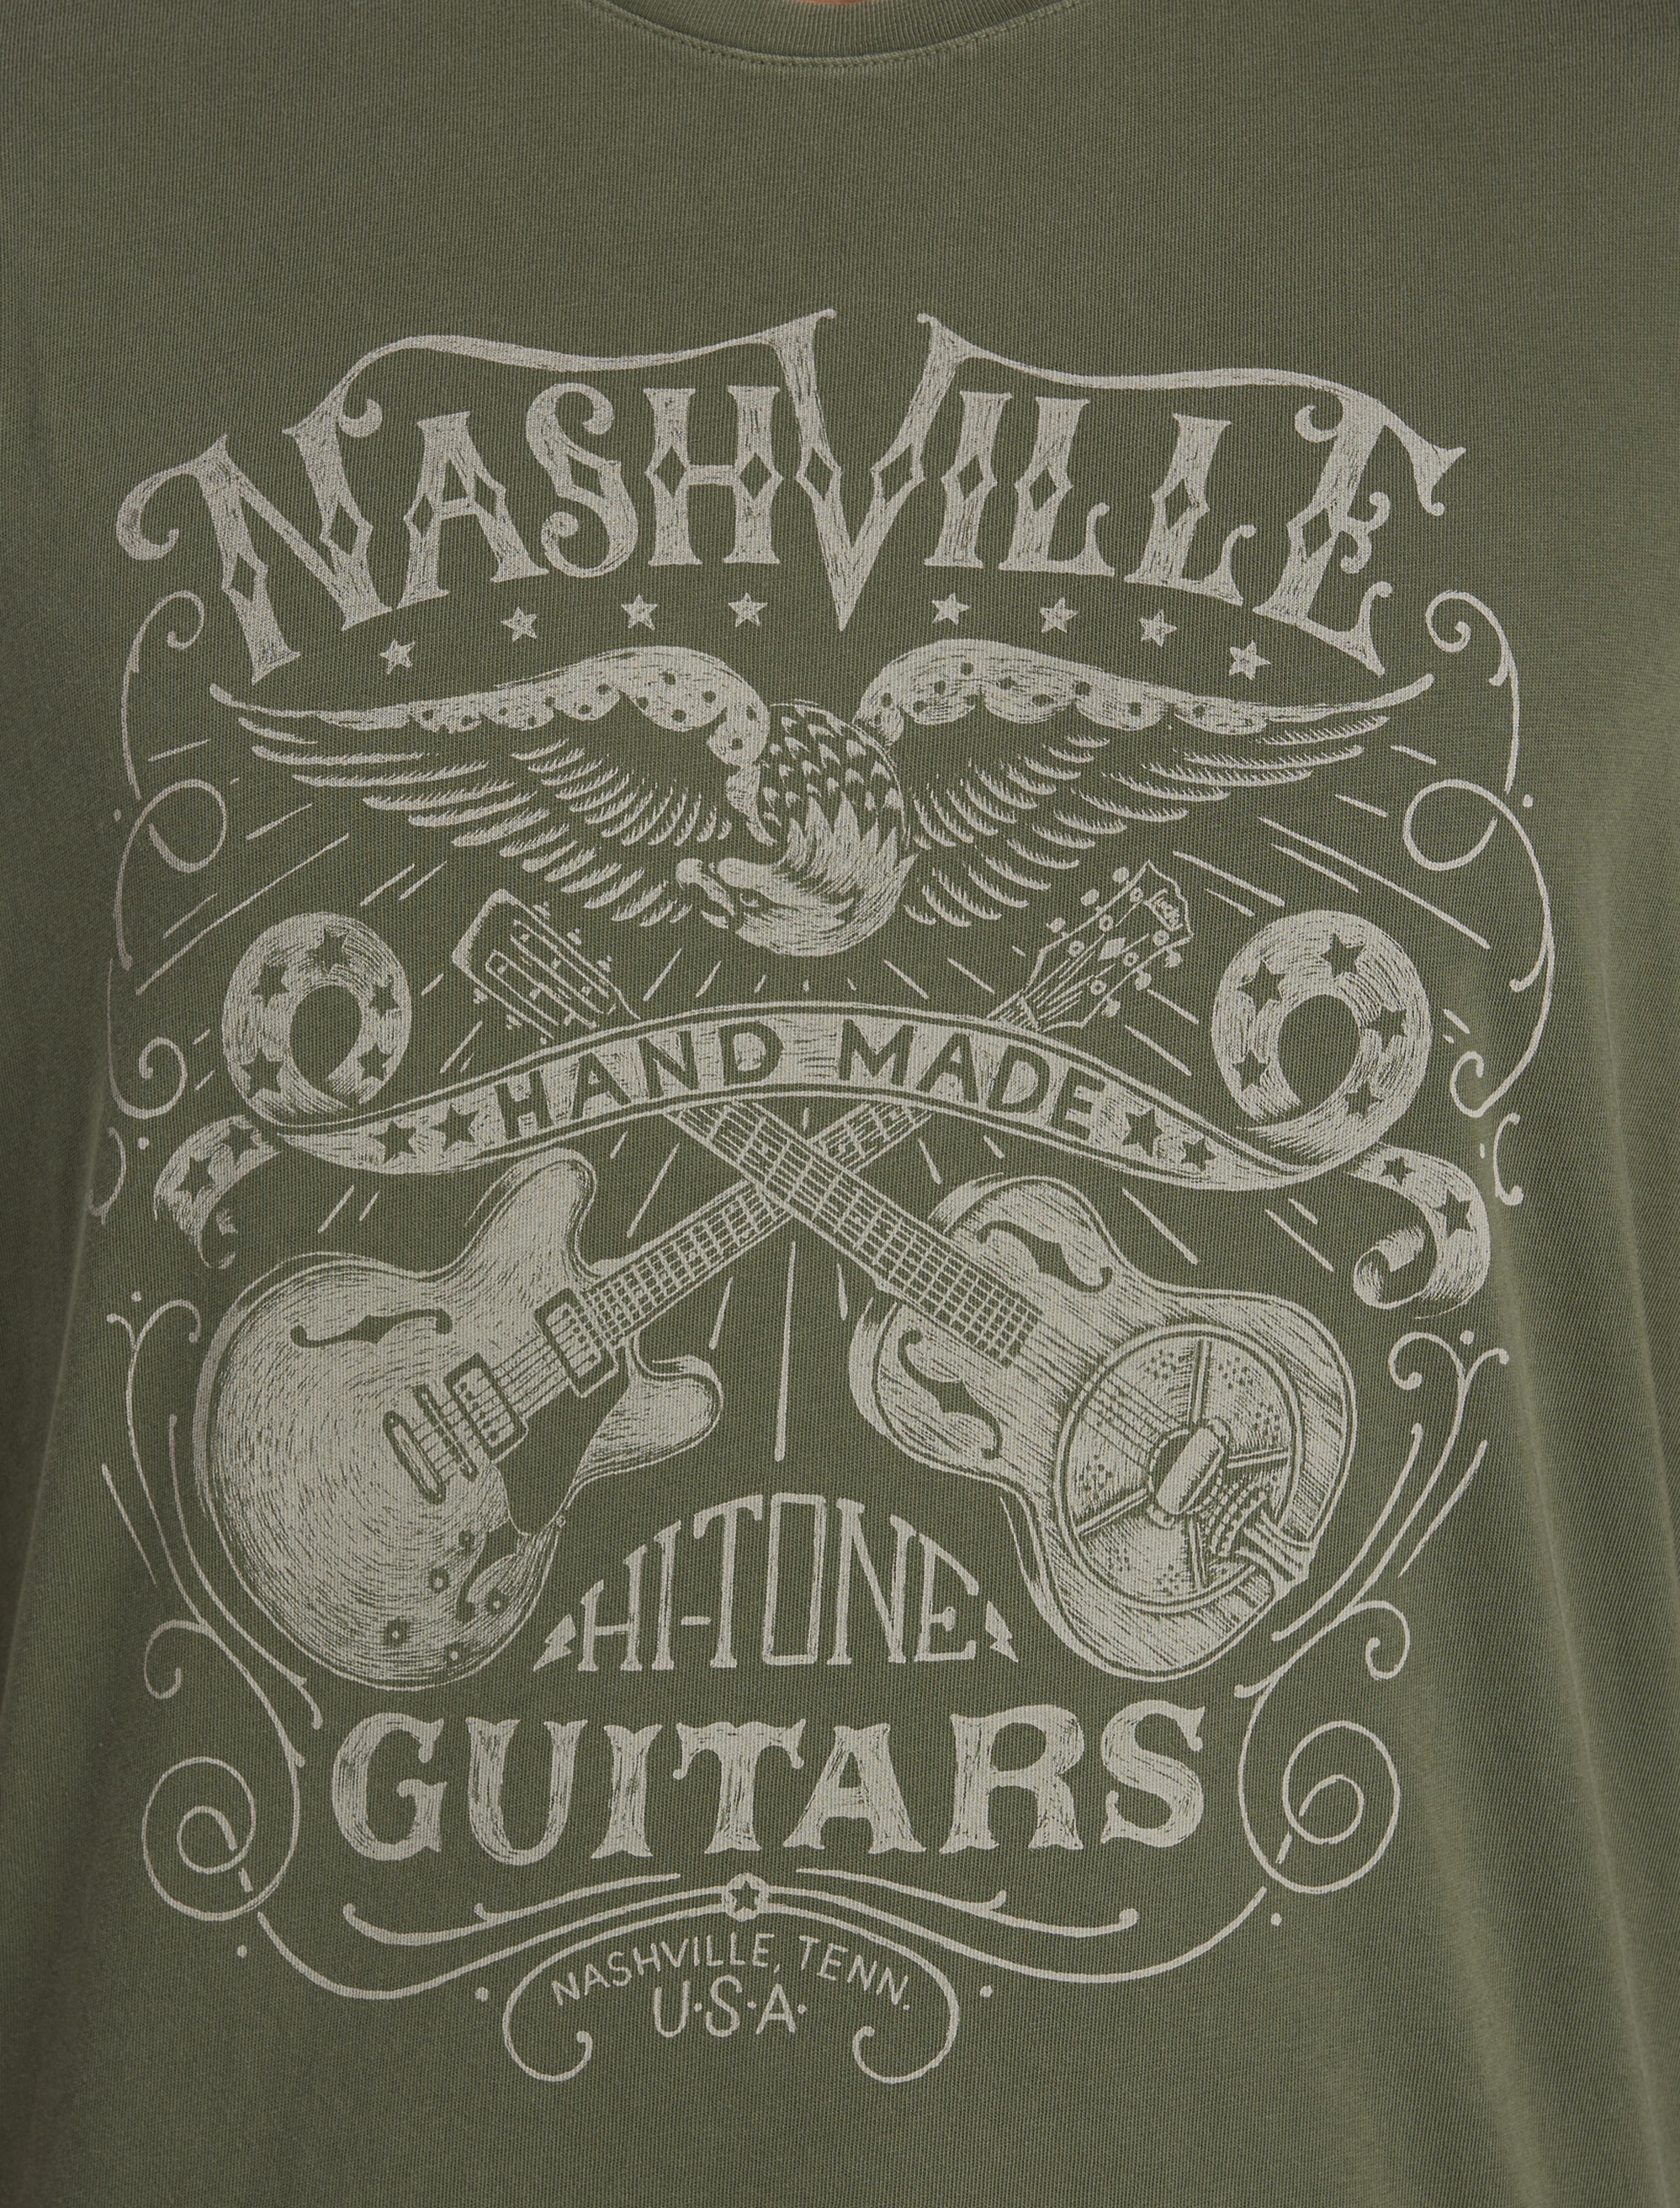 Nashville Guitars Graphic Tee